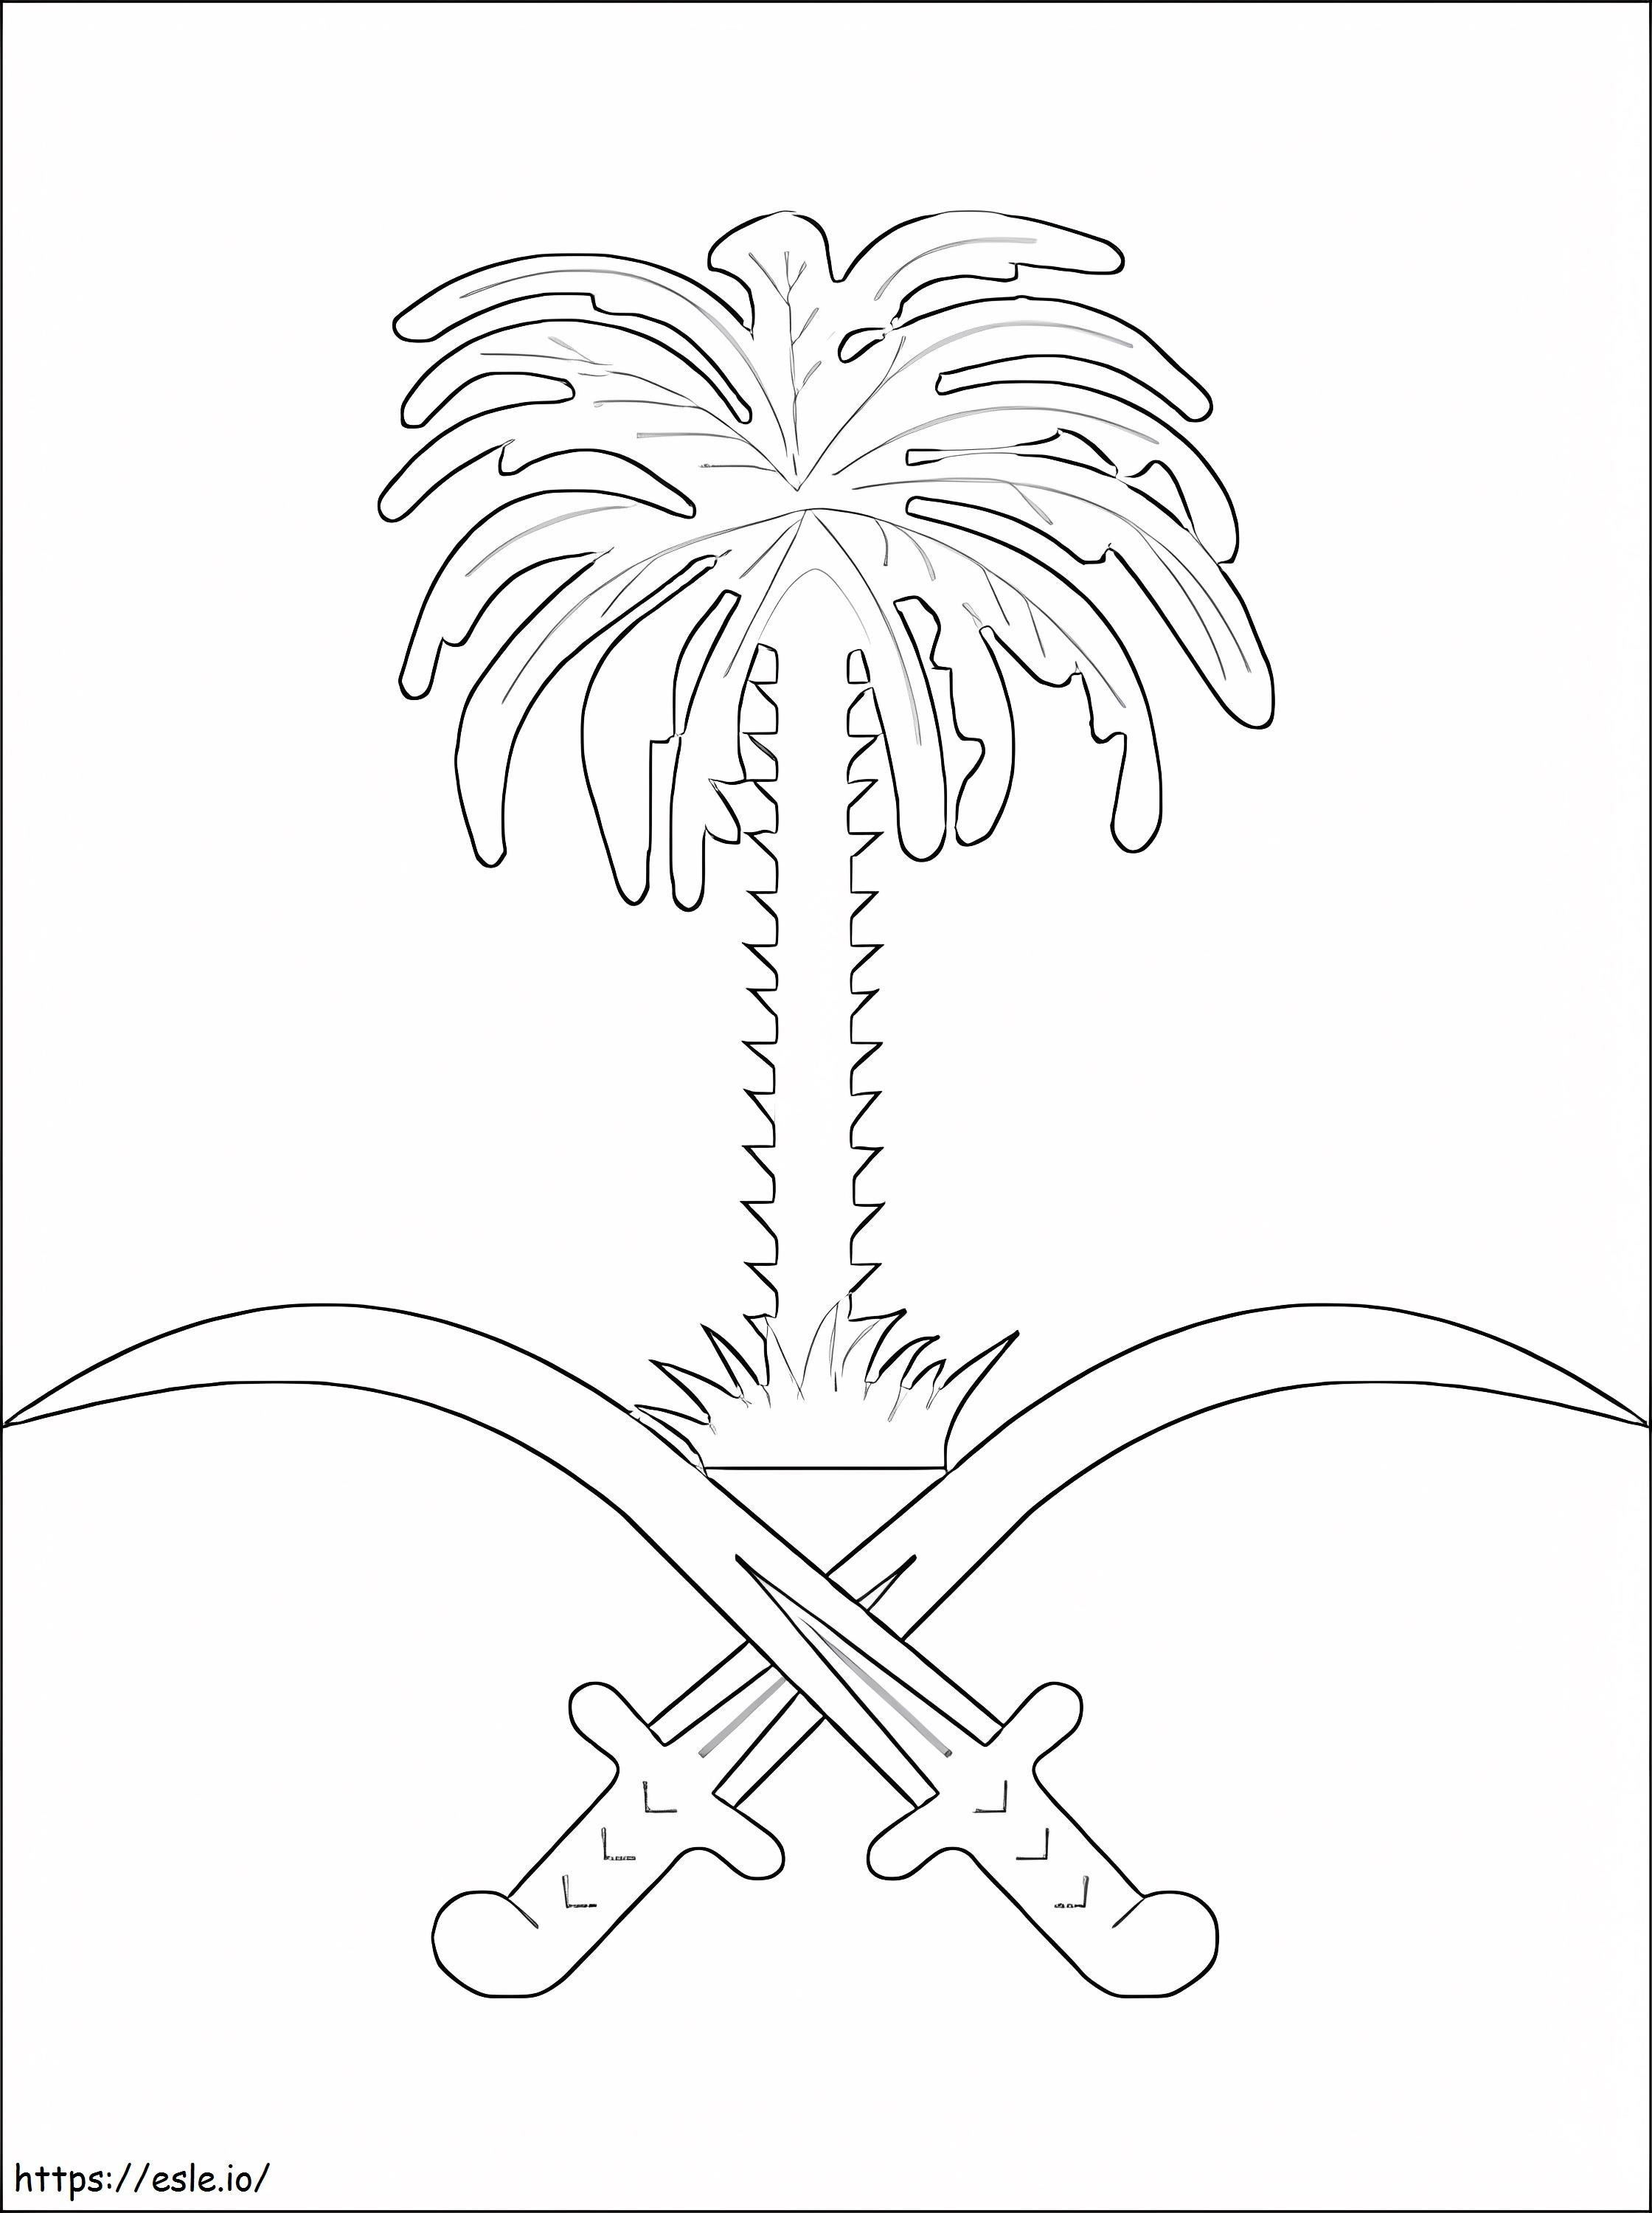 Saudi Arabia Coat Of Arms coloring page